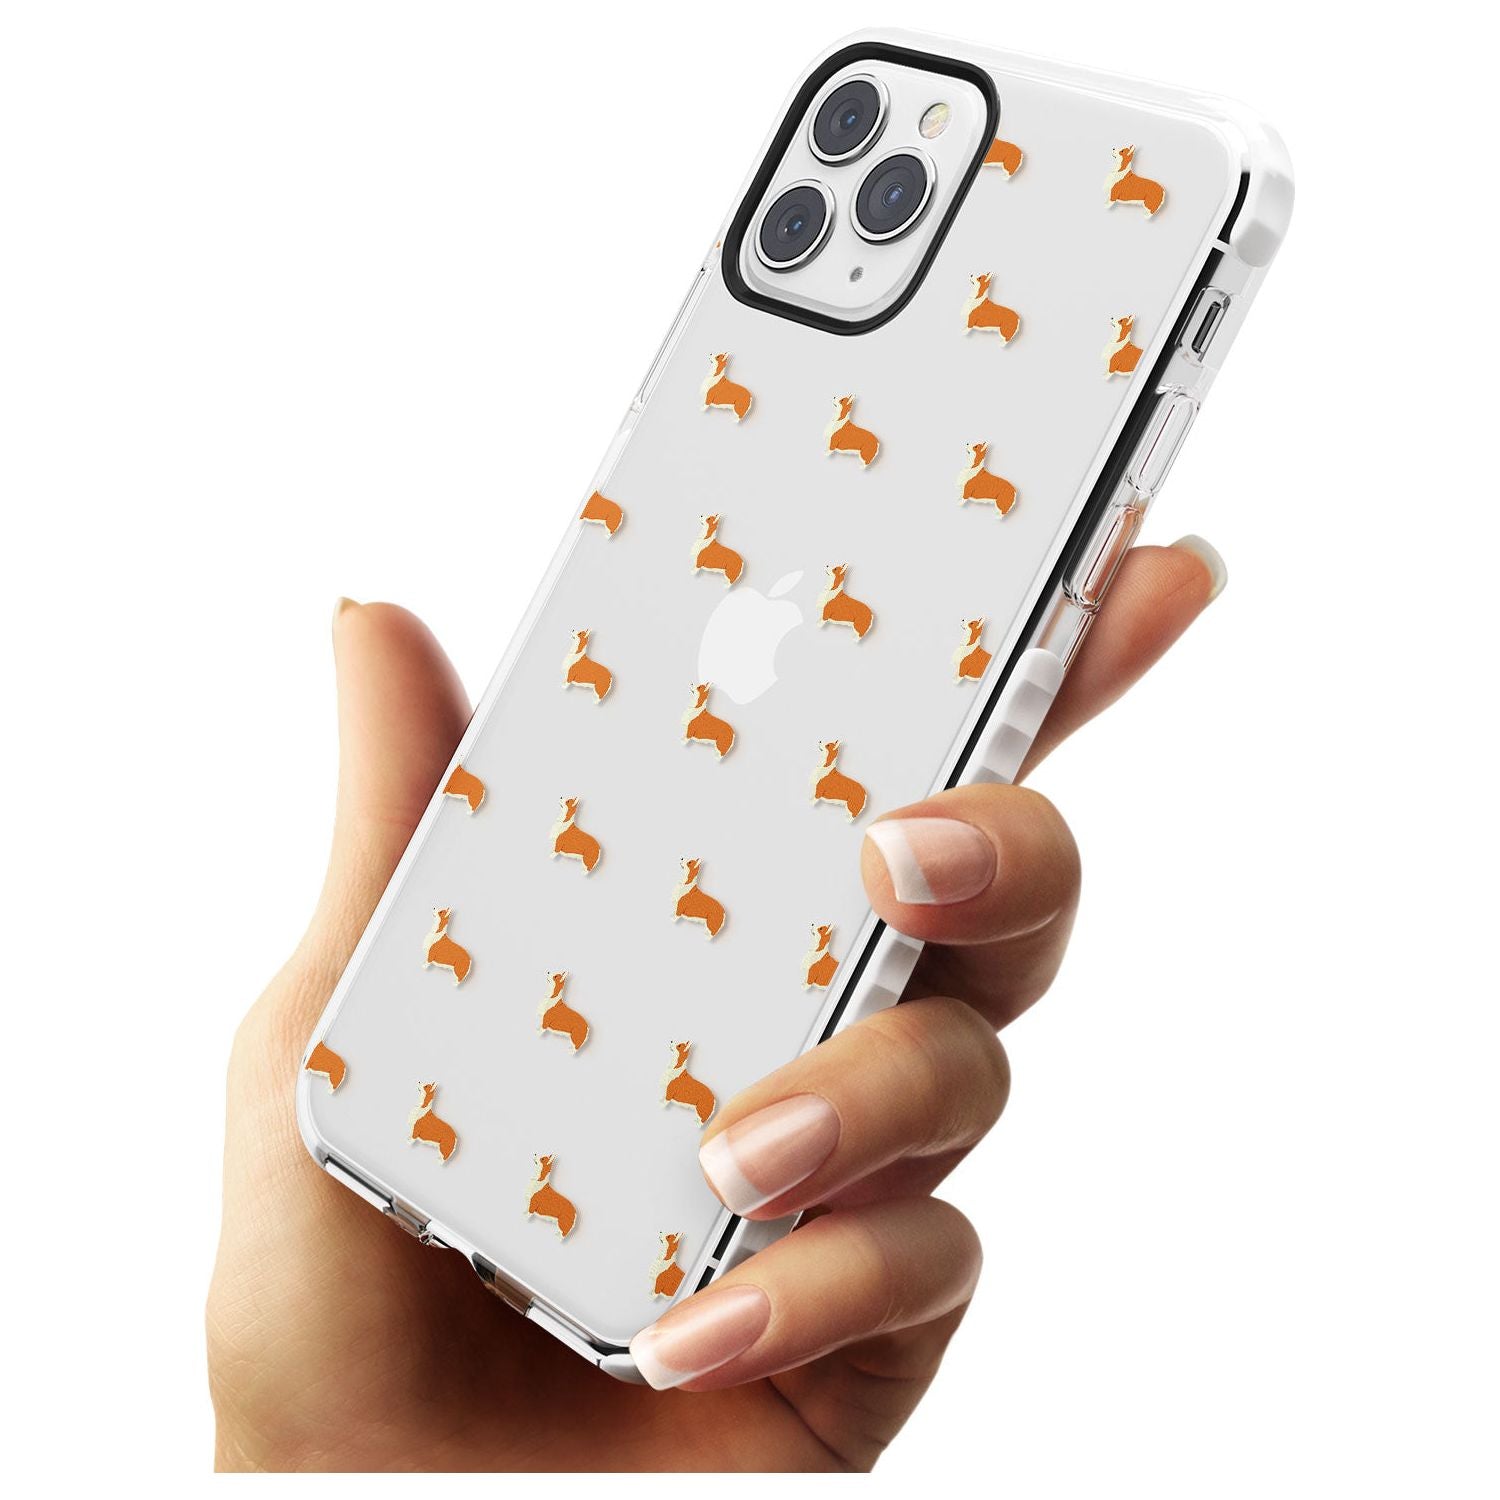 Pembroke Welsh Corgi Dog Pattern Clear Impact Phone Case for iPhone 11 Pro Max